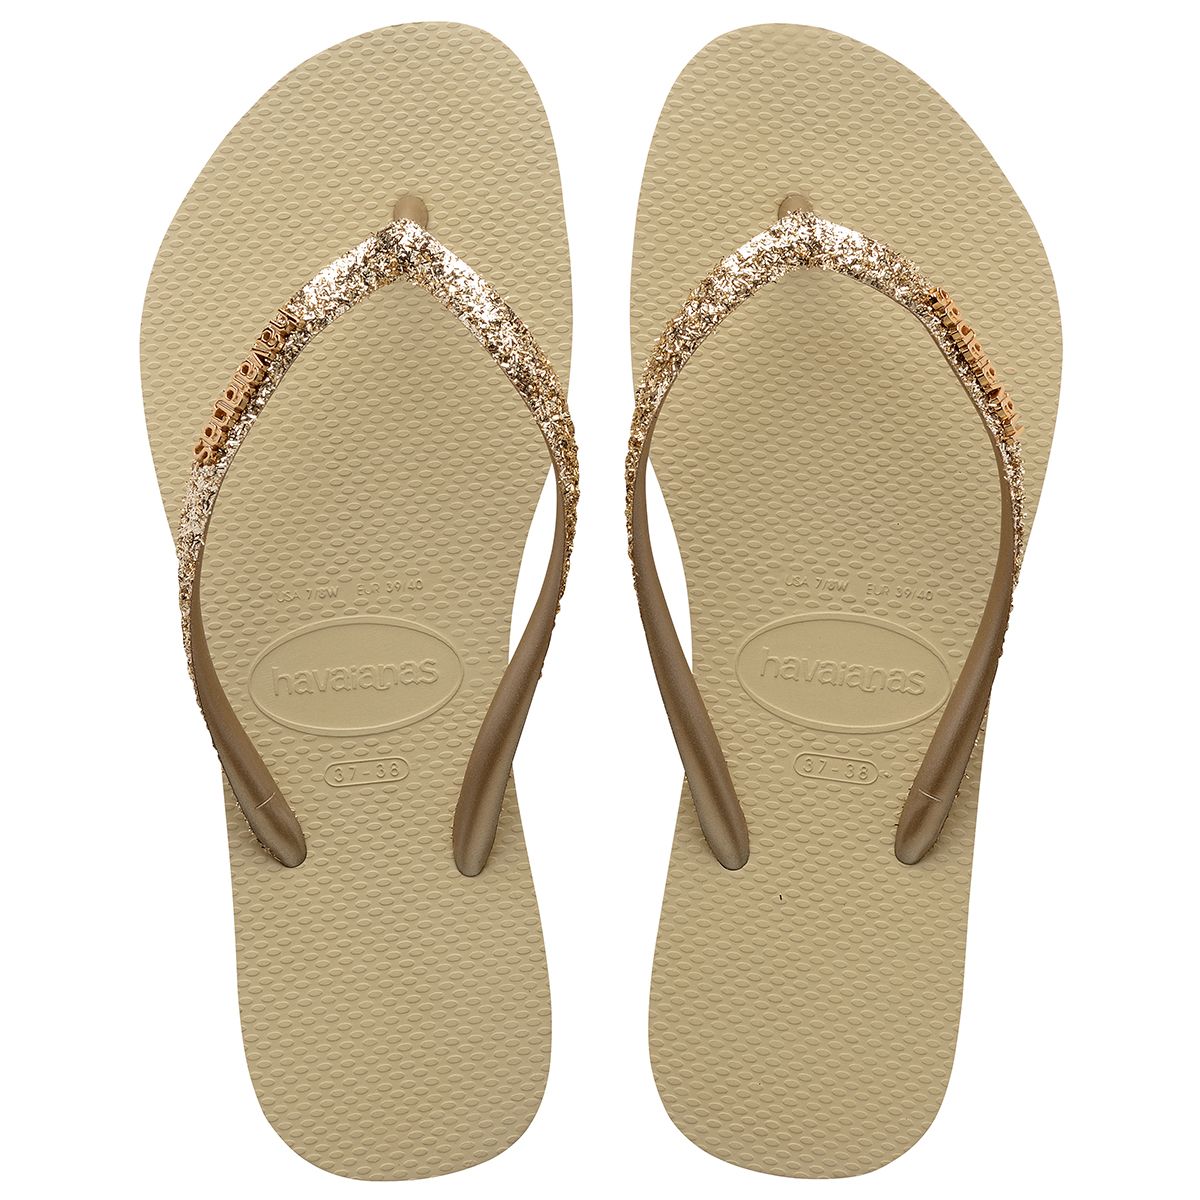 Havaianas Slim Glitter 2 Womens Sandal 0154-Sand Grey 9